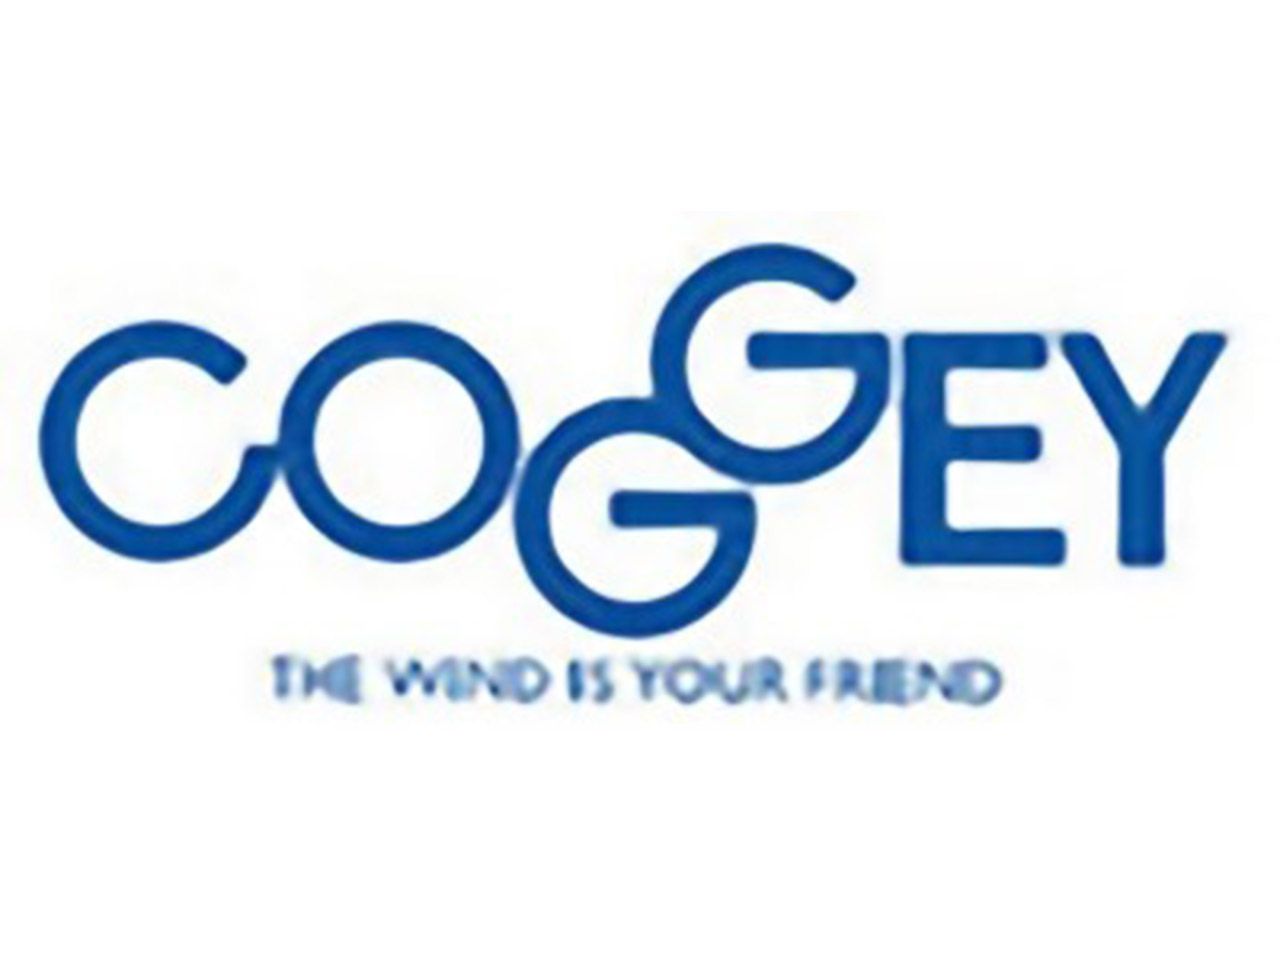 COGGEY